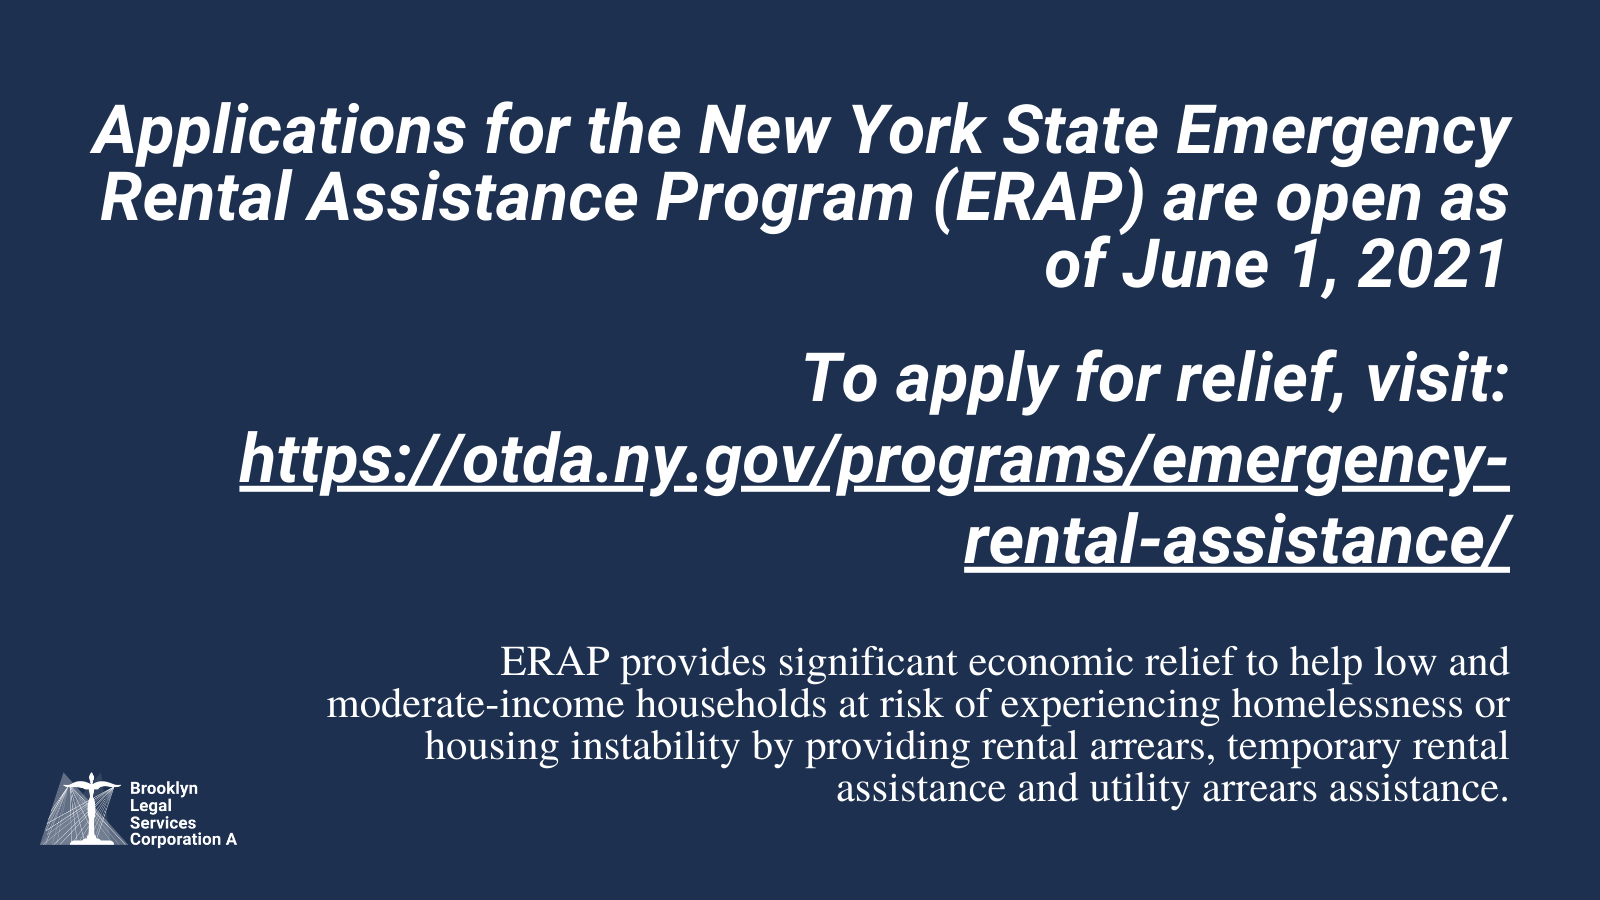 The Emergency Rental Assistance Program